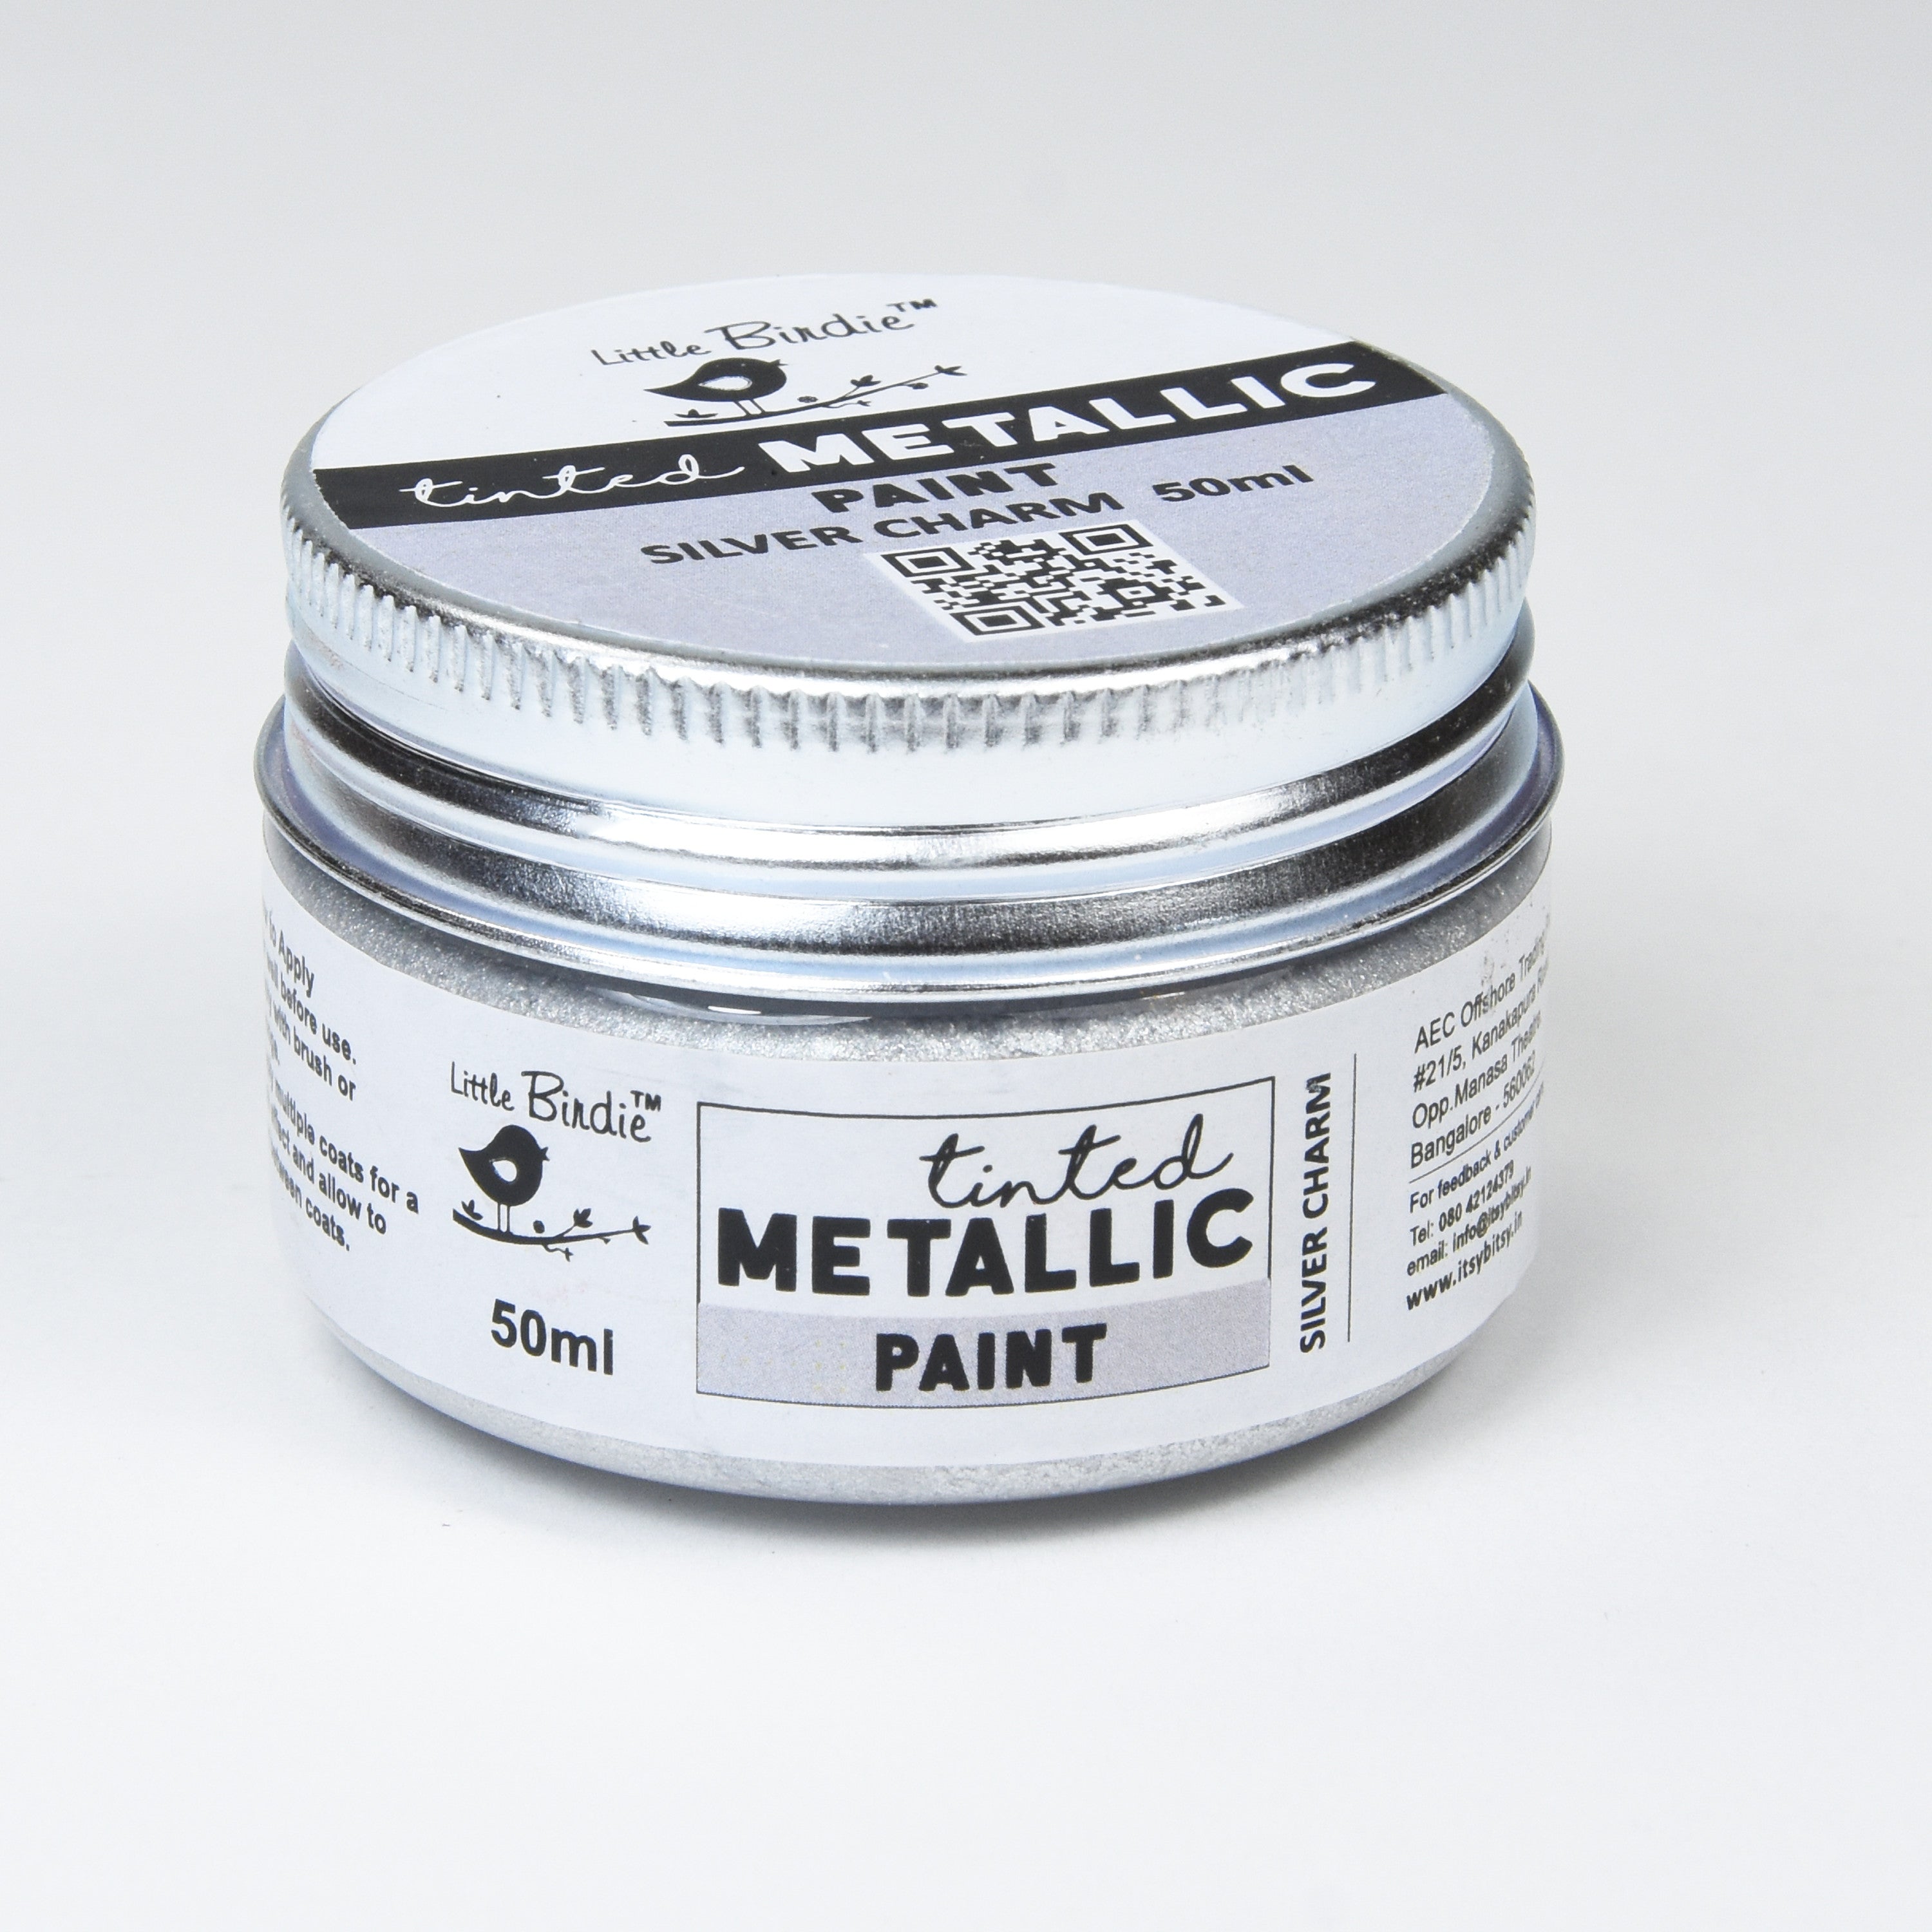 Tinted Metallic Paint Silver Charm 50Ml Bottle Lb - VC